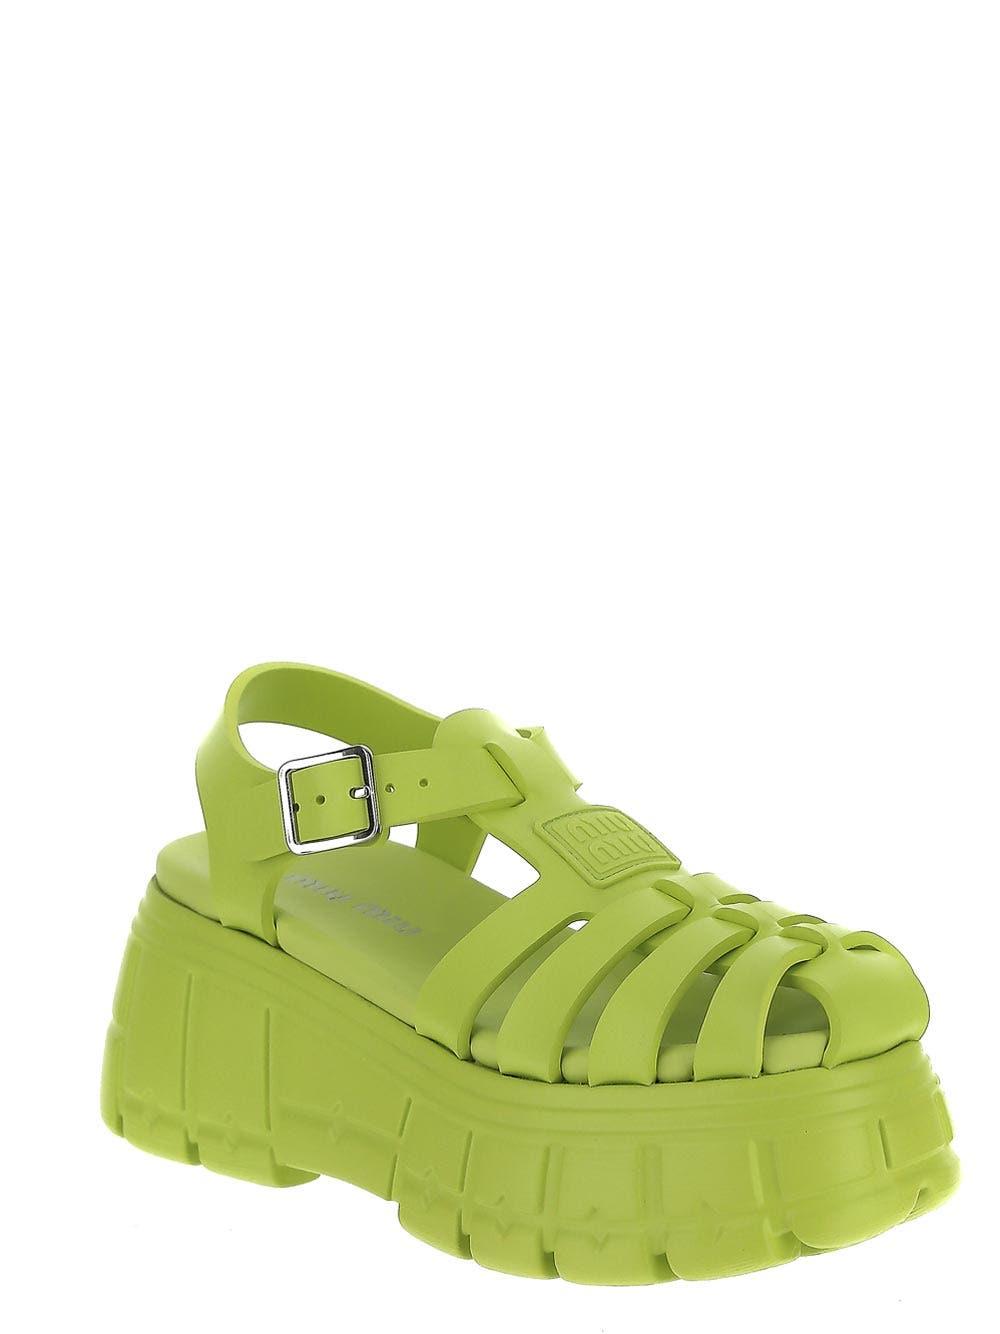 Miu Miu Caged Platform Sandals in Green | Lyst